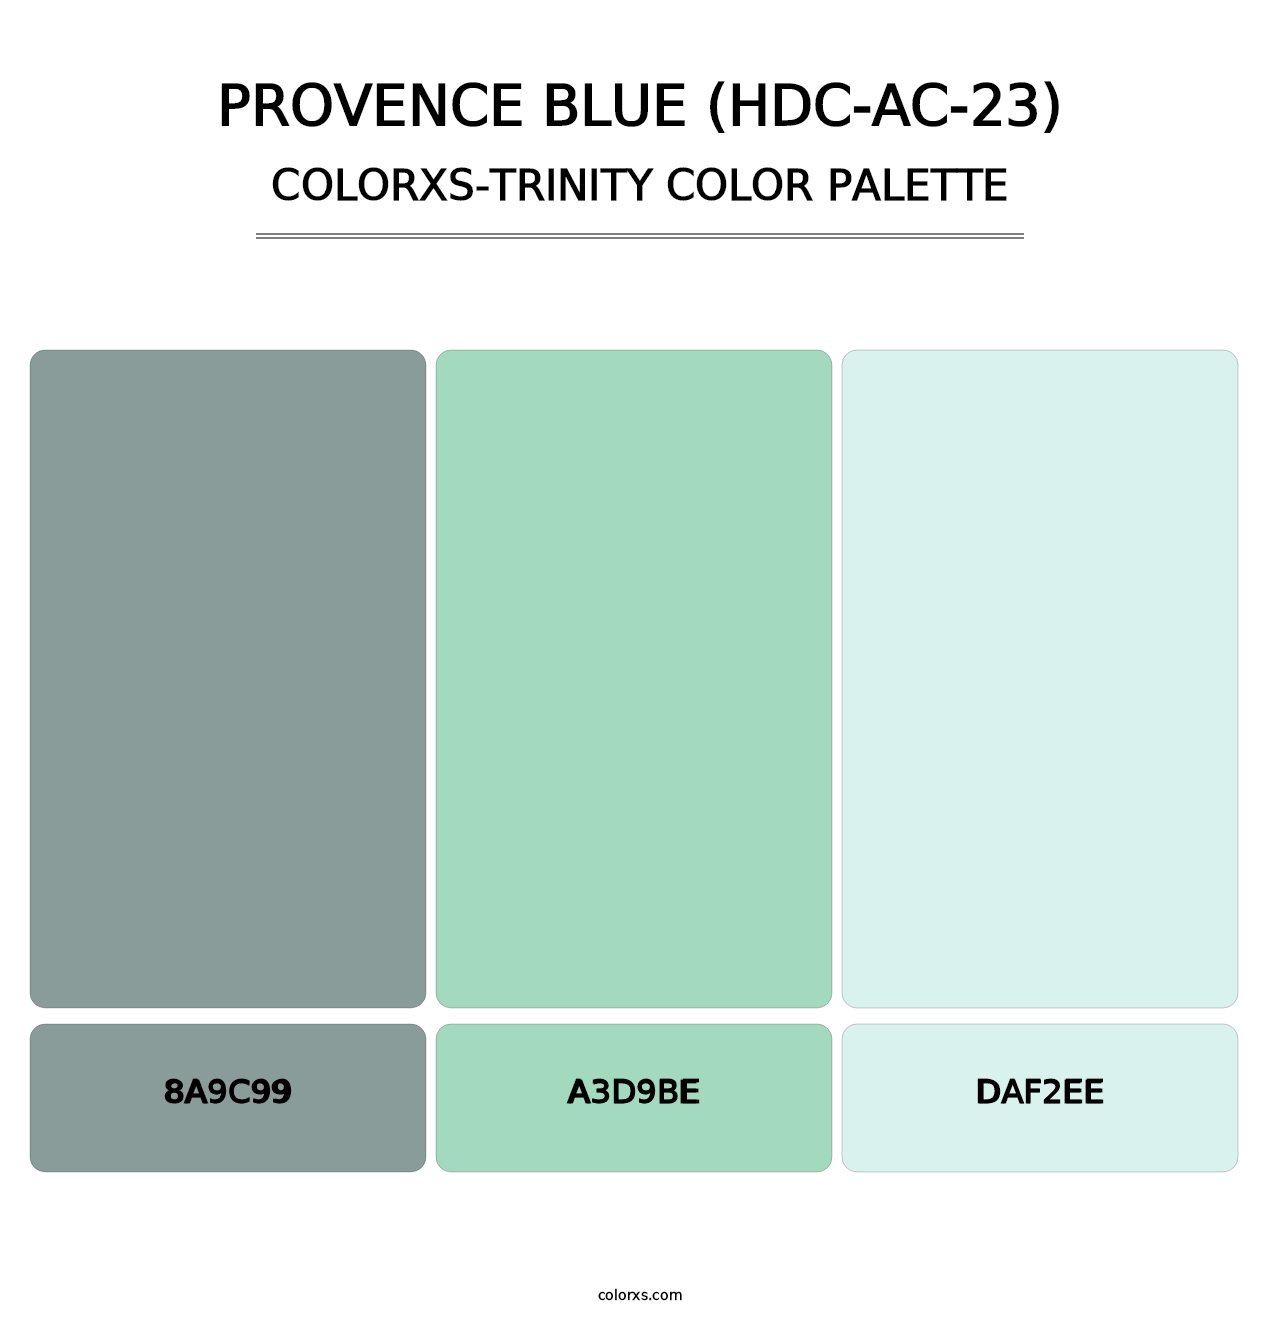 Provence Blue (HDC-AC-23) - Colorxs Trinity Palette